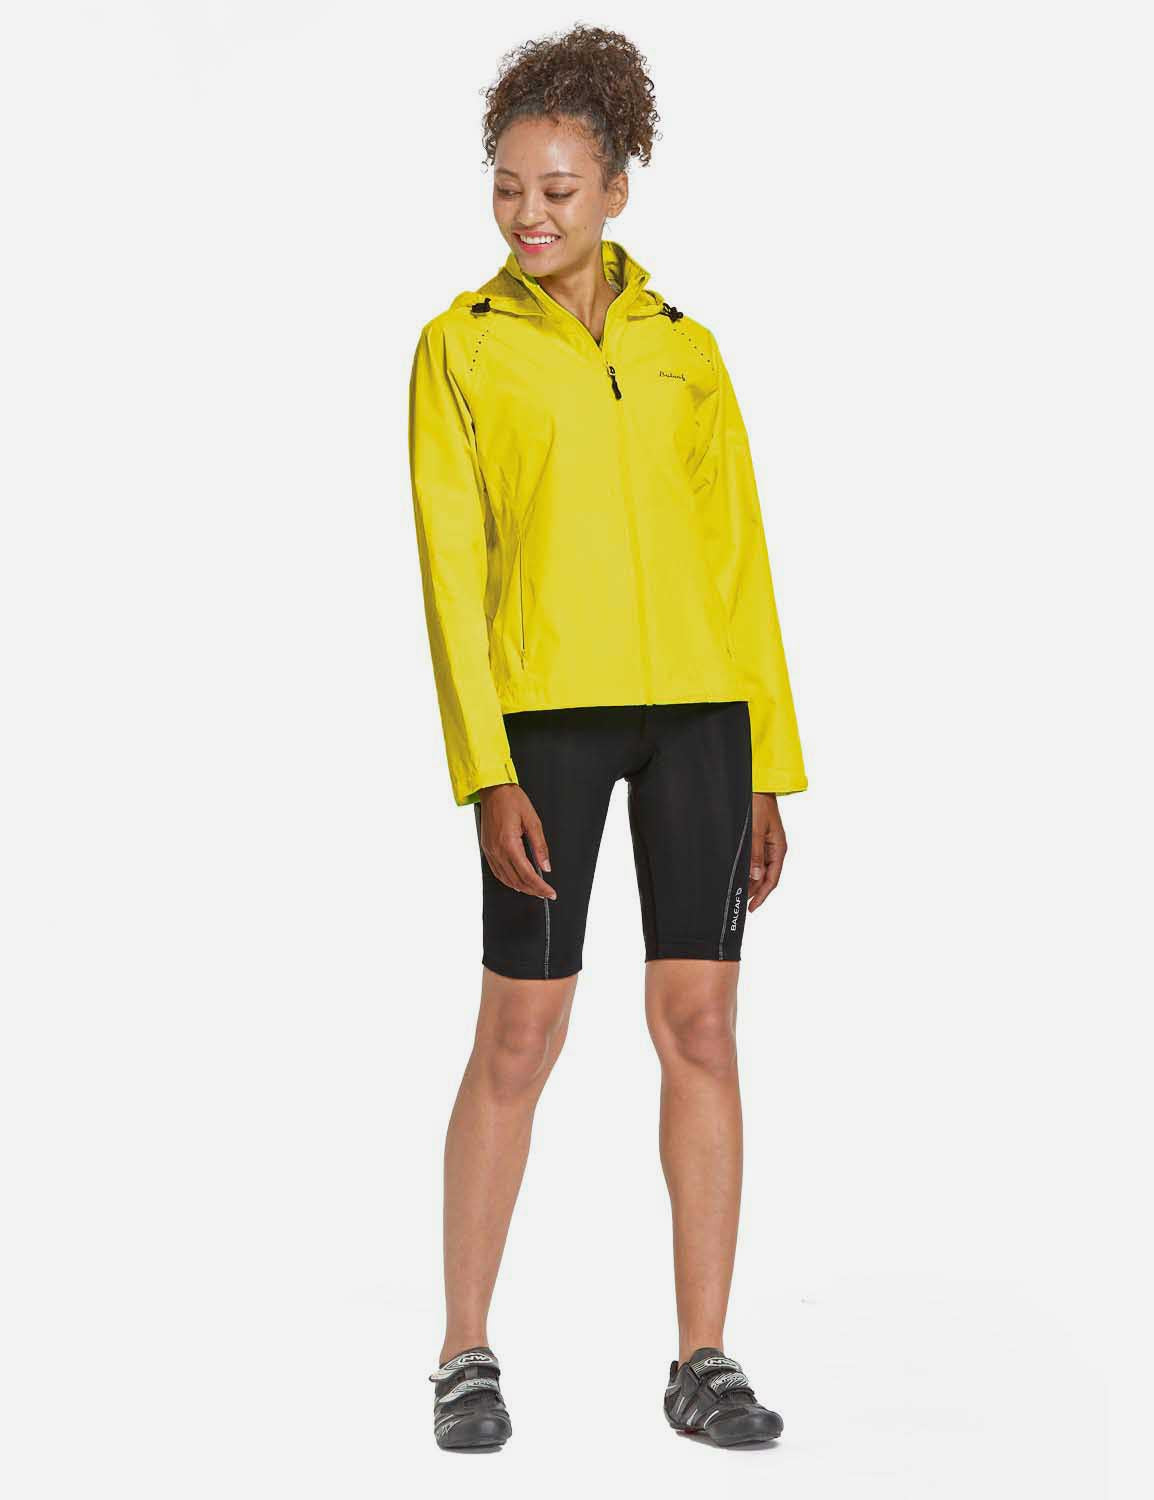 Baleaf Women's Waterproof Lightweight Full-Zip Pocketed Cycling Jacket aaa468 Illuminating Full